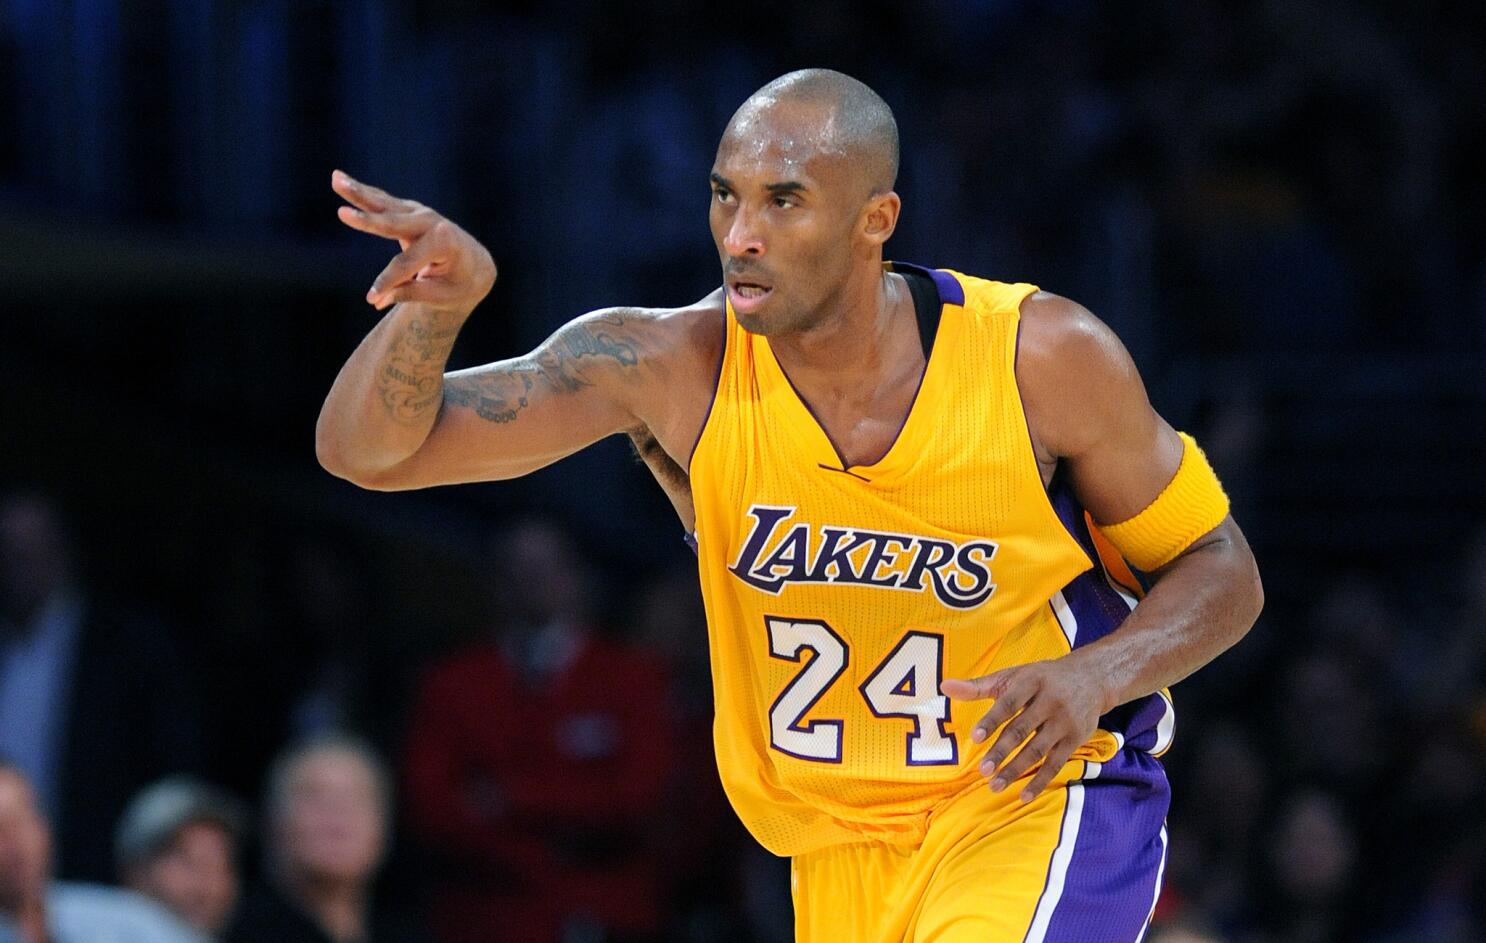 Kobe Bryant skips shoot-around with sore throat, but likely to